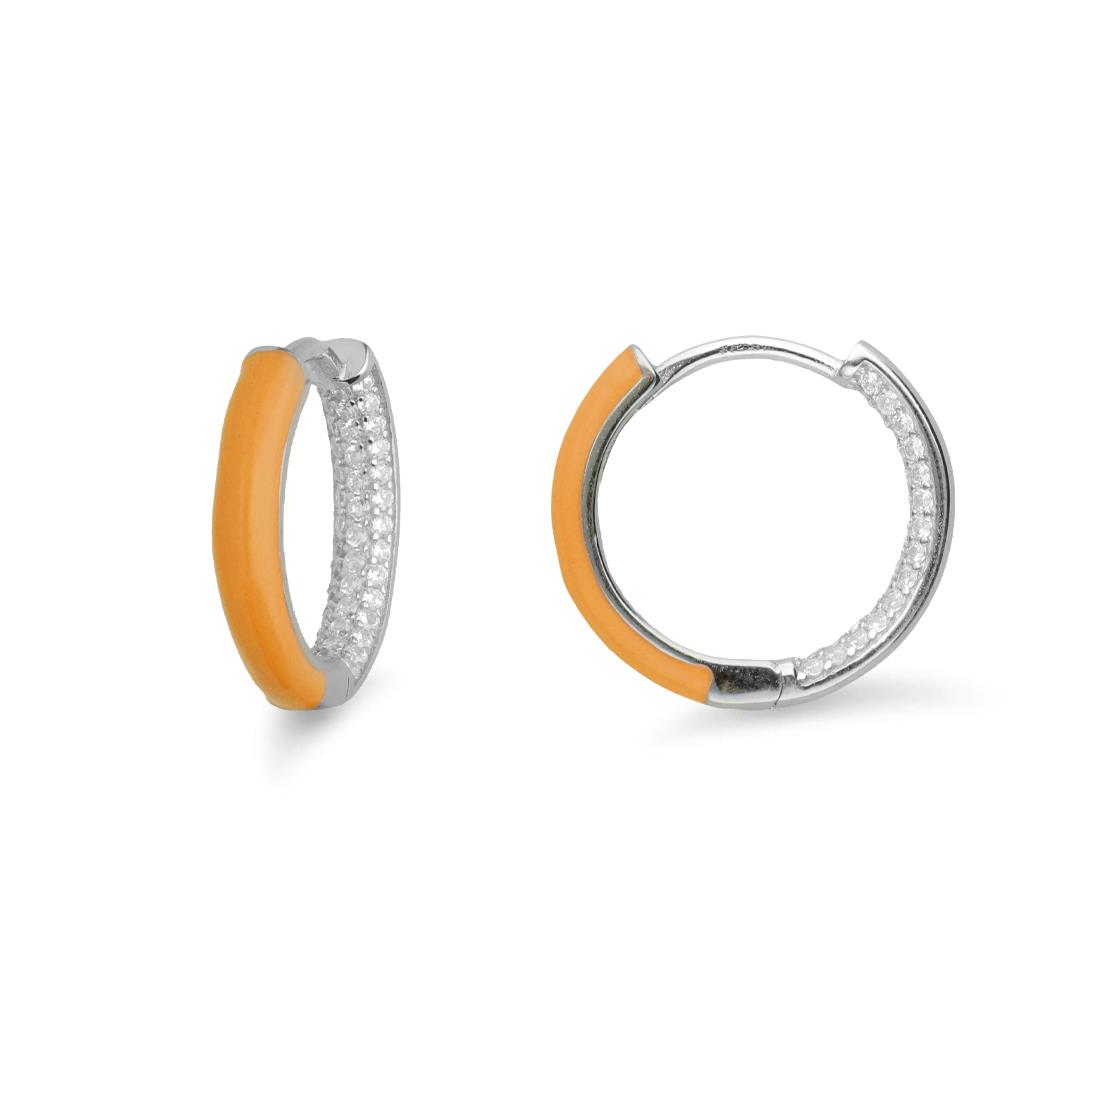 Hoop earrings in silver and orange enamel - ORO&CO 925